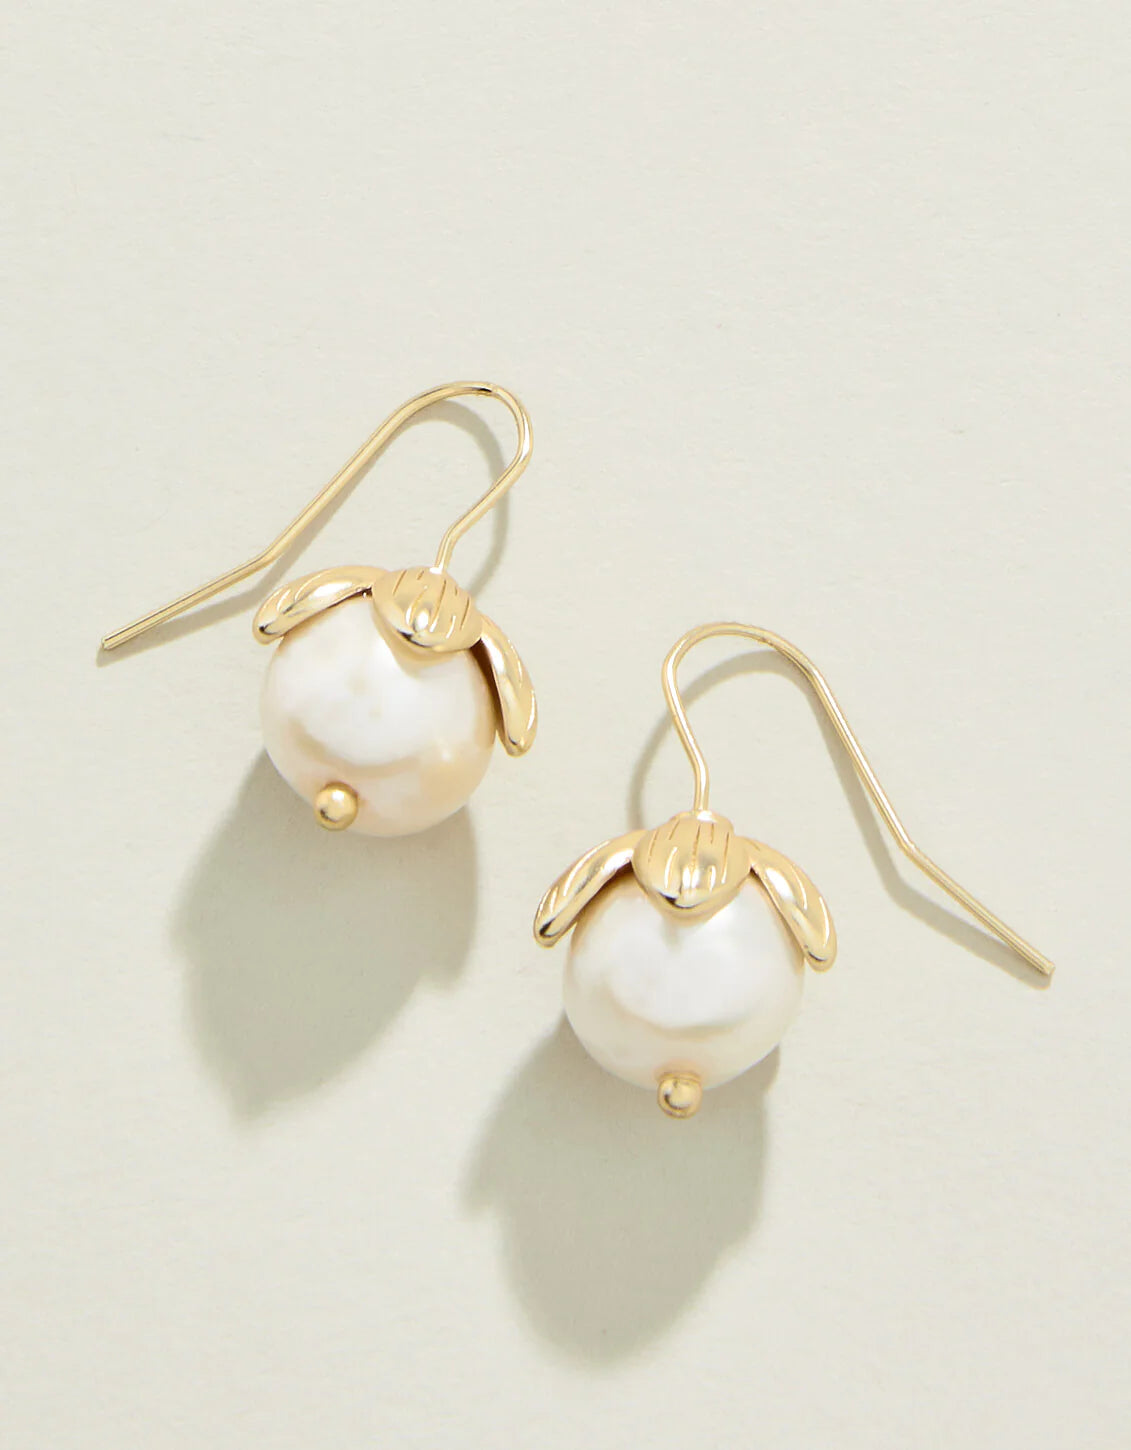 Earrings - Bauble Drop Pearl